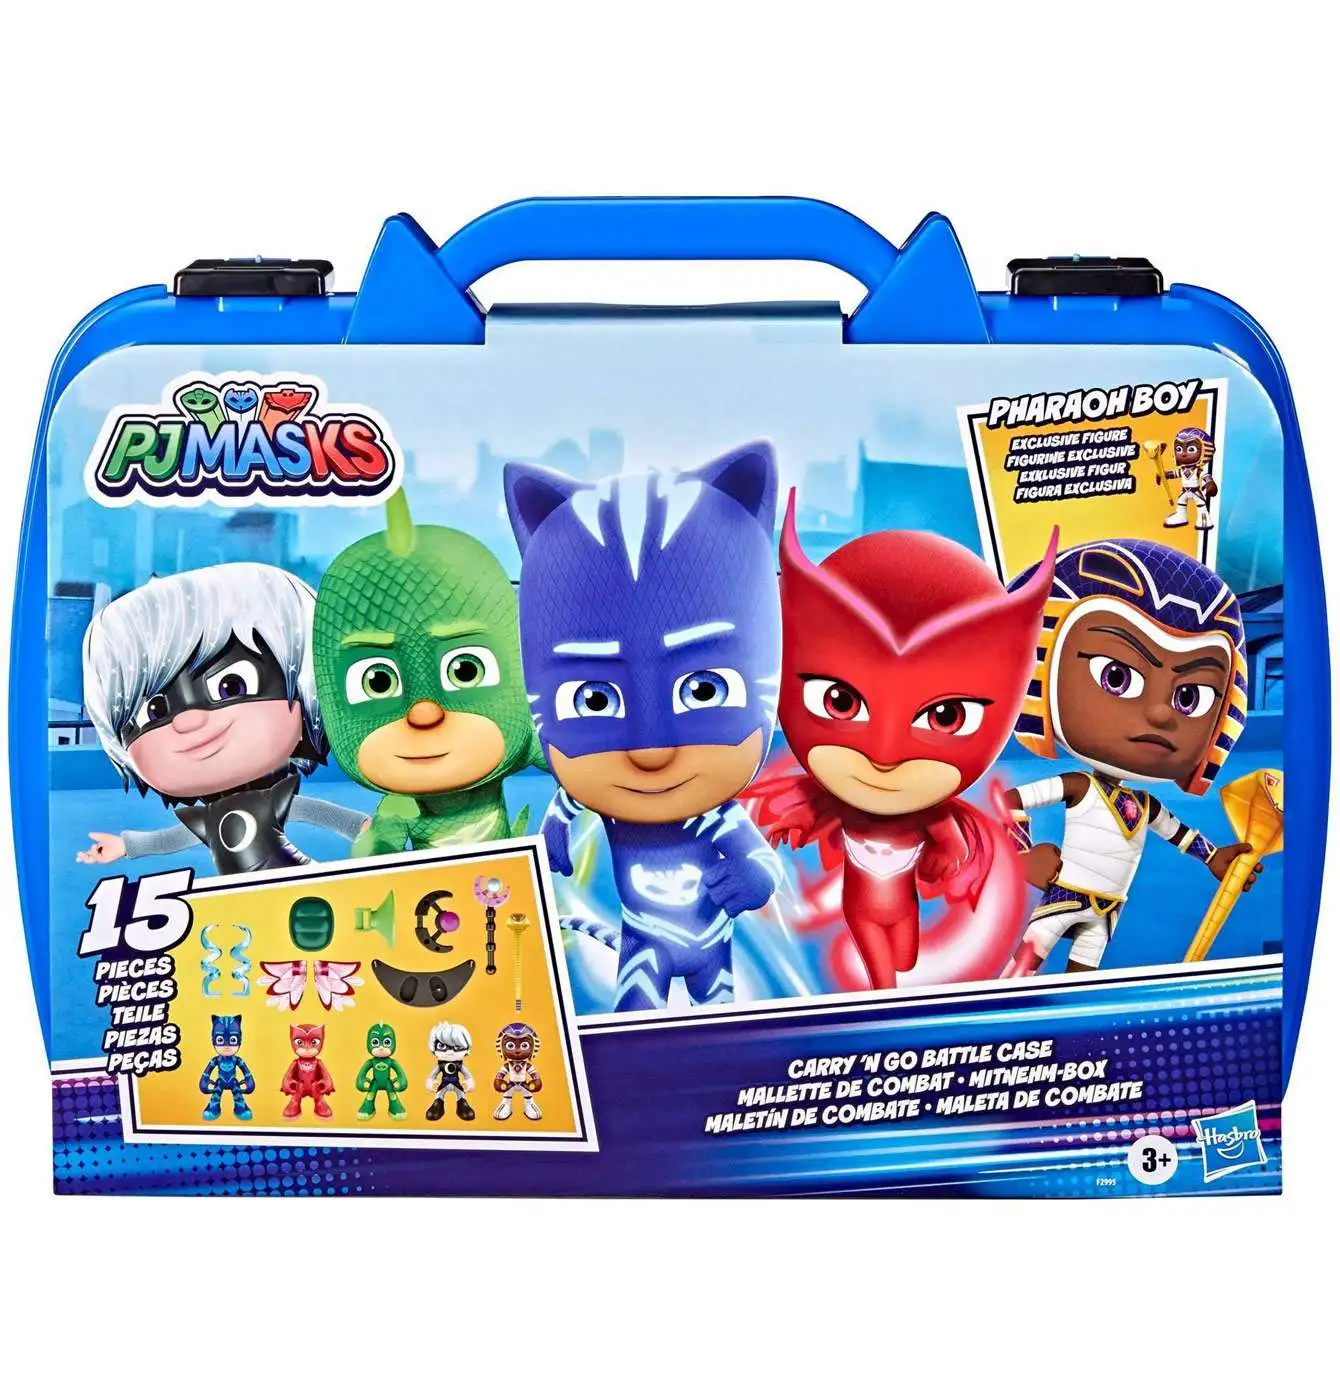 Nietje Ontembare Lastig Disney Junior PJ Masks Carry N Go Battle Case Exclusive 3 Play Set Hasbro -  ToyWiz